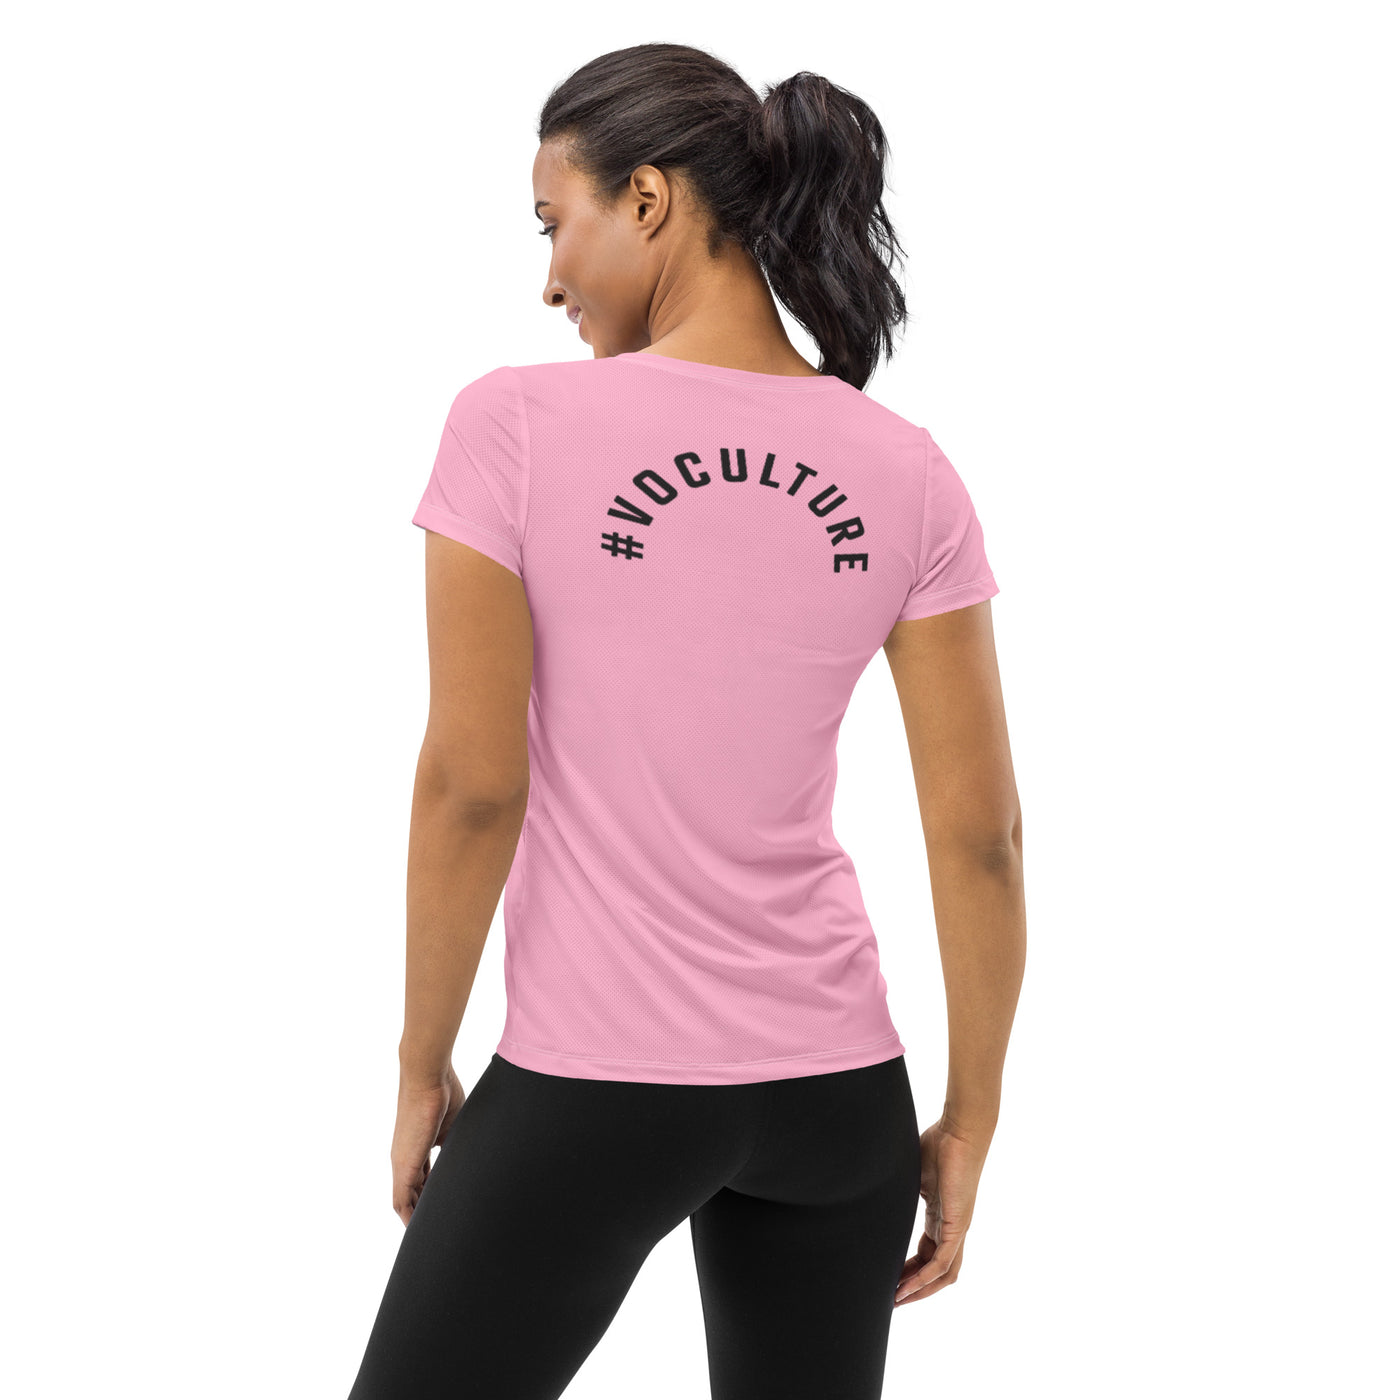 VO CULTURE Women's Athletic T-shirt